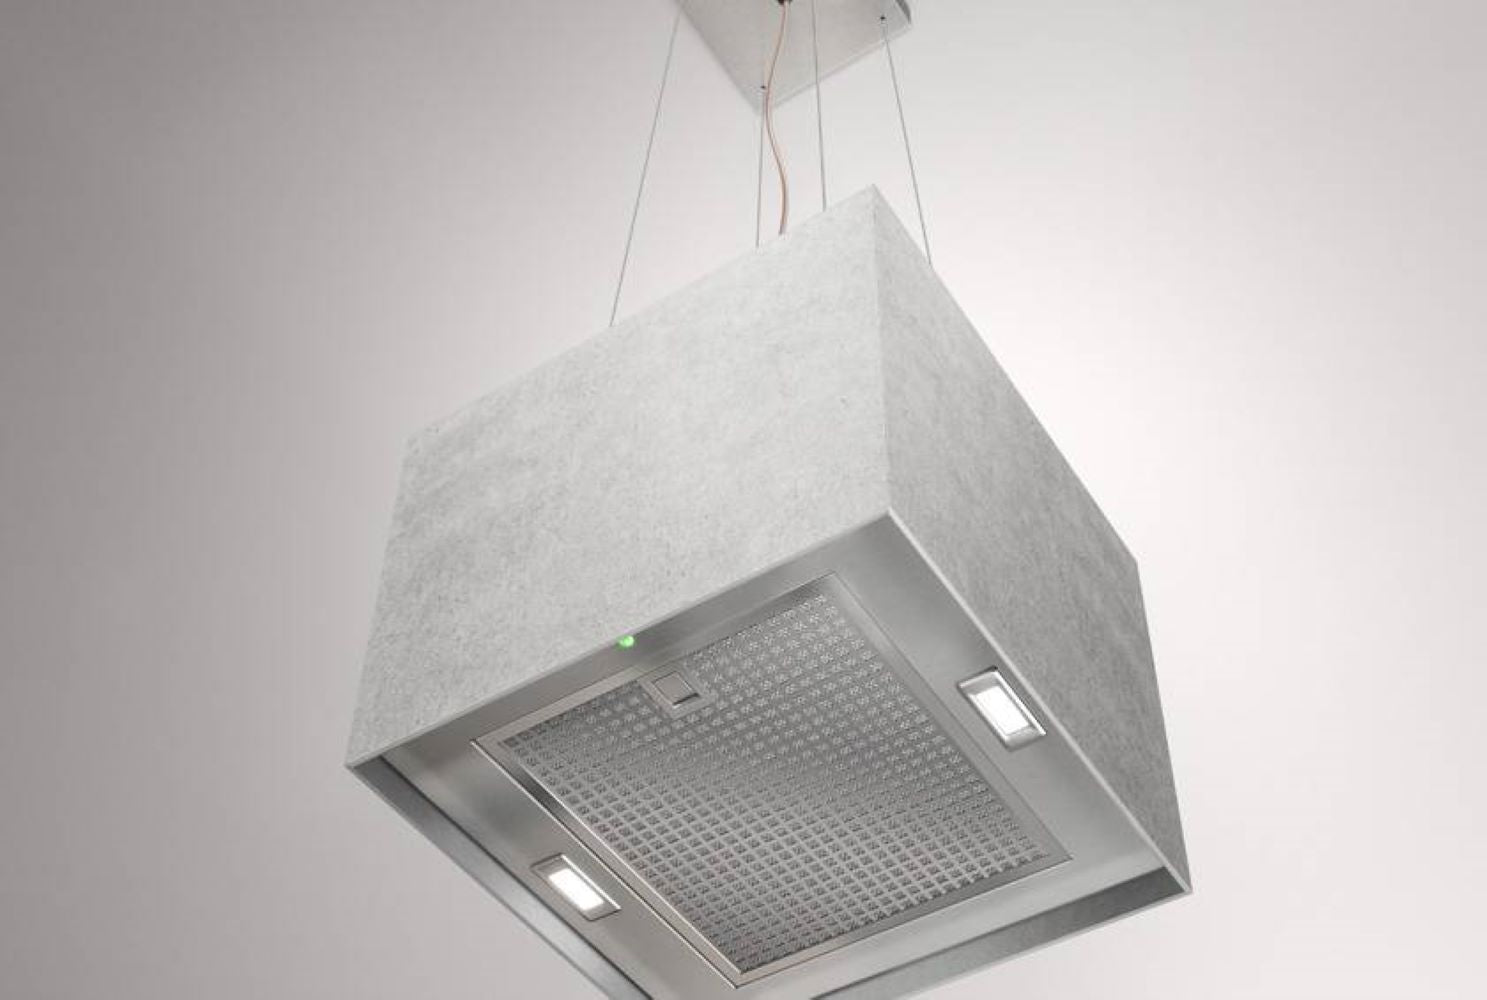 Airforce Concrete 40cm Island Lamp Cooker Hood with Integra System - Grey - Devine Distribution Ltd